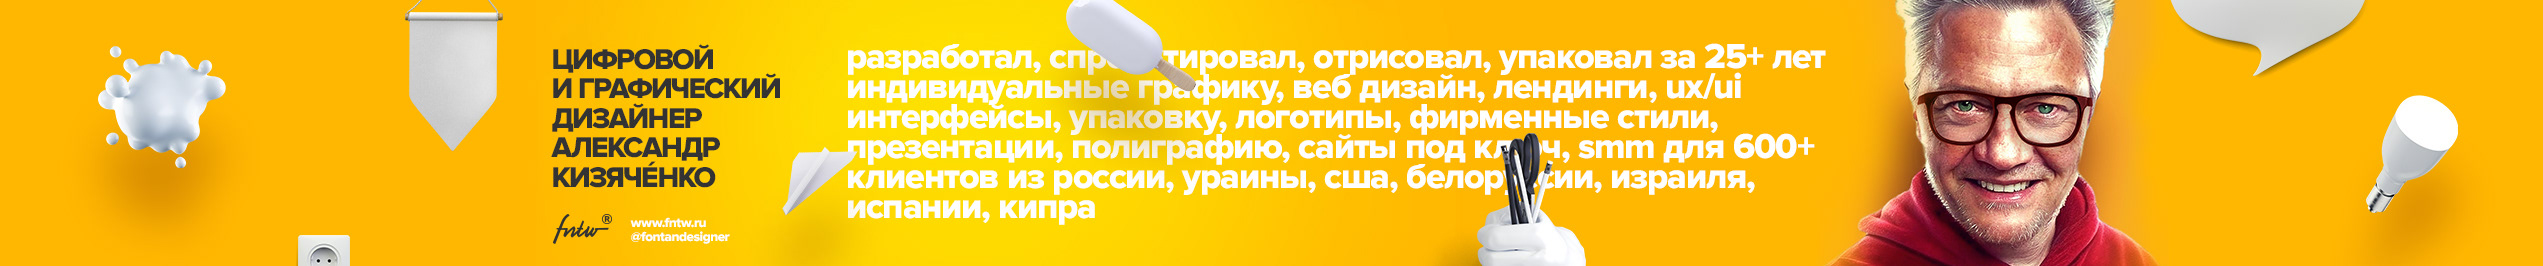 Alexander Kizyachenko's profile banner